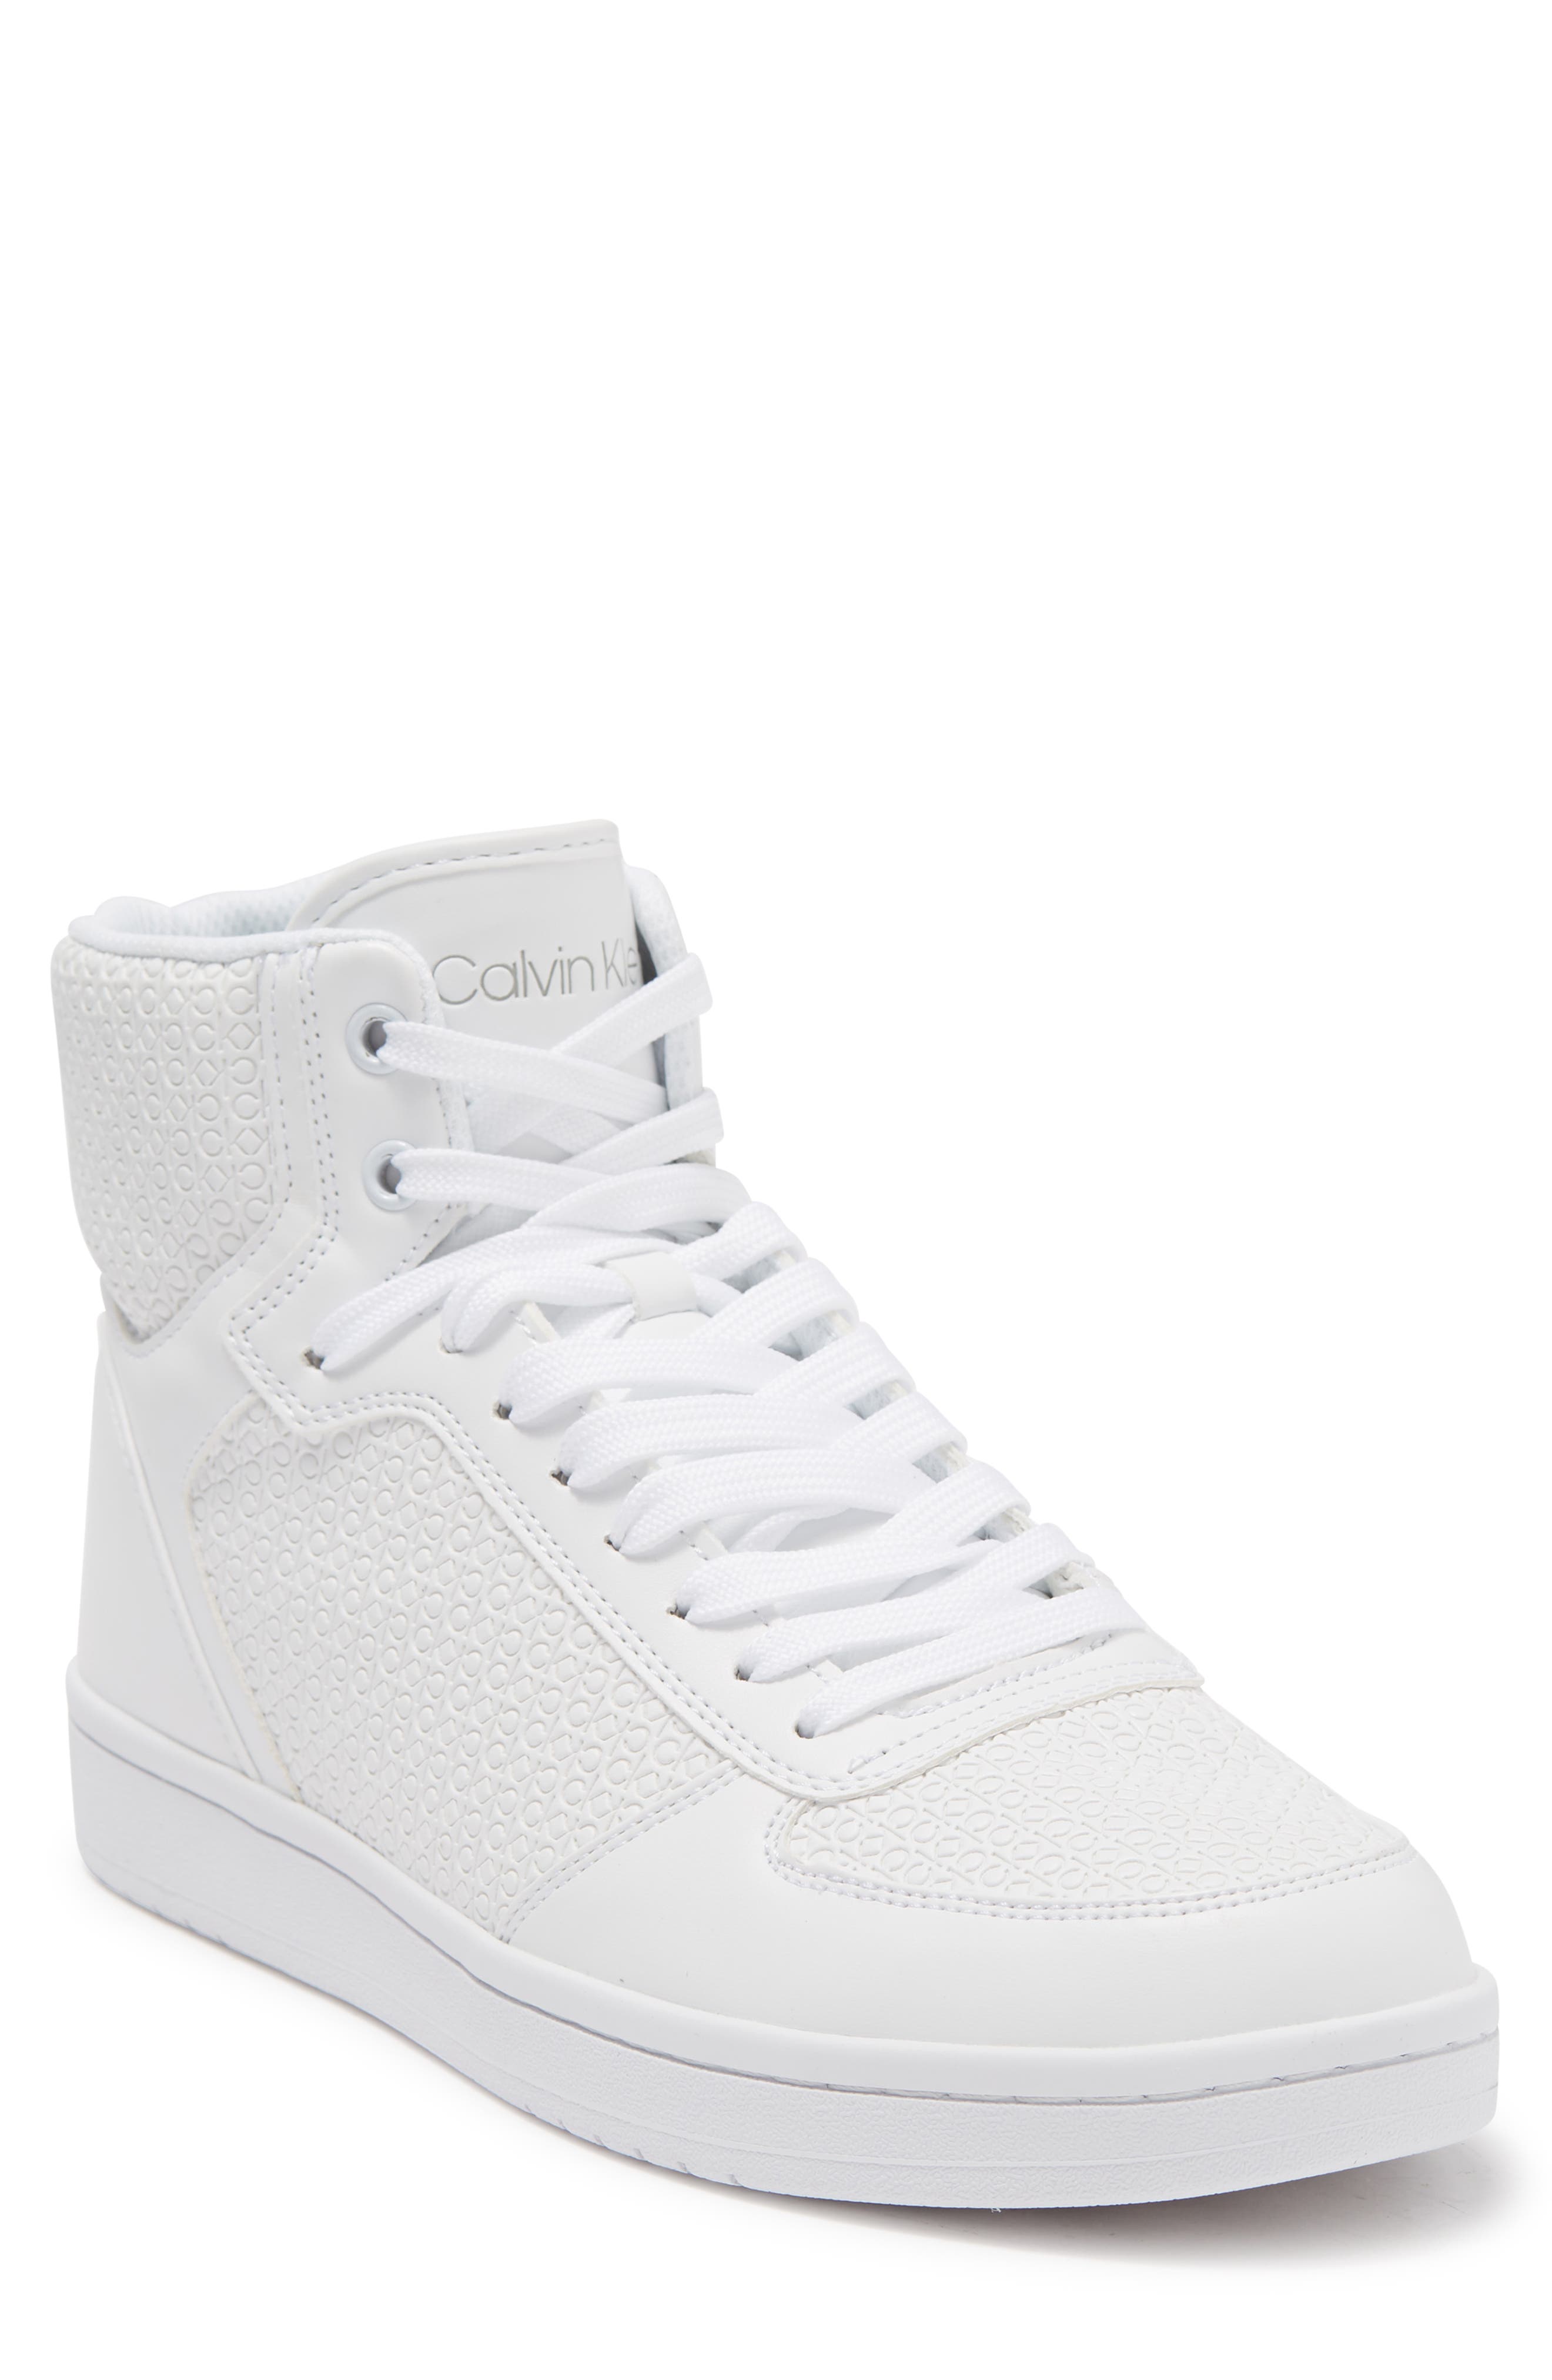 Calvin Klein Loroe High Top Sneaker In White Ll | ModeSens